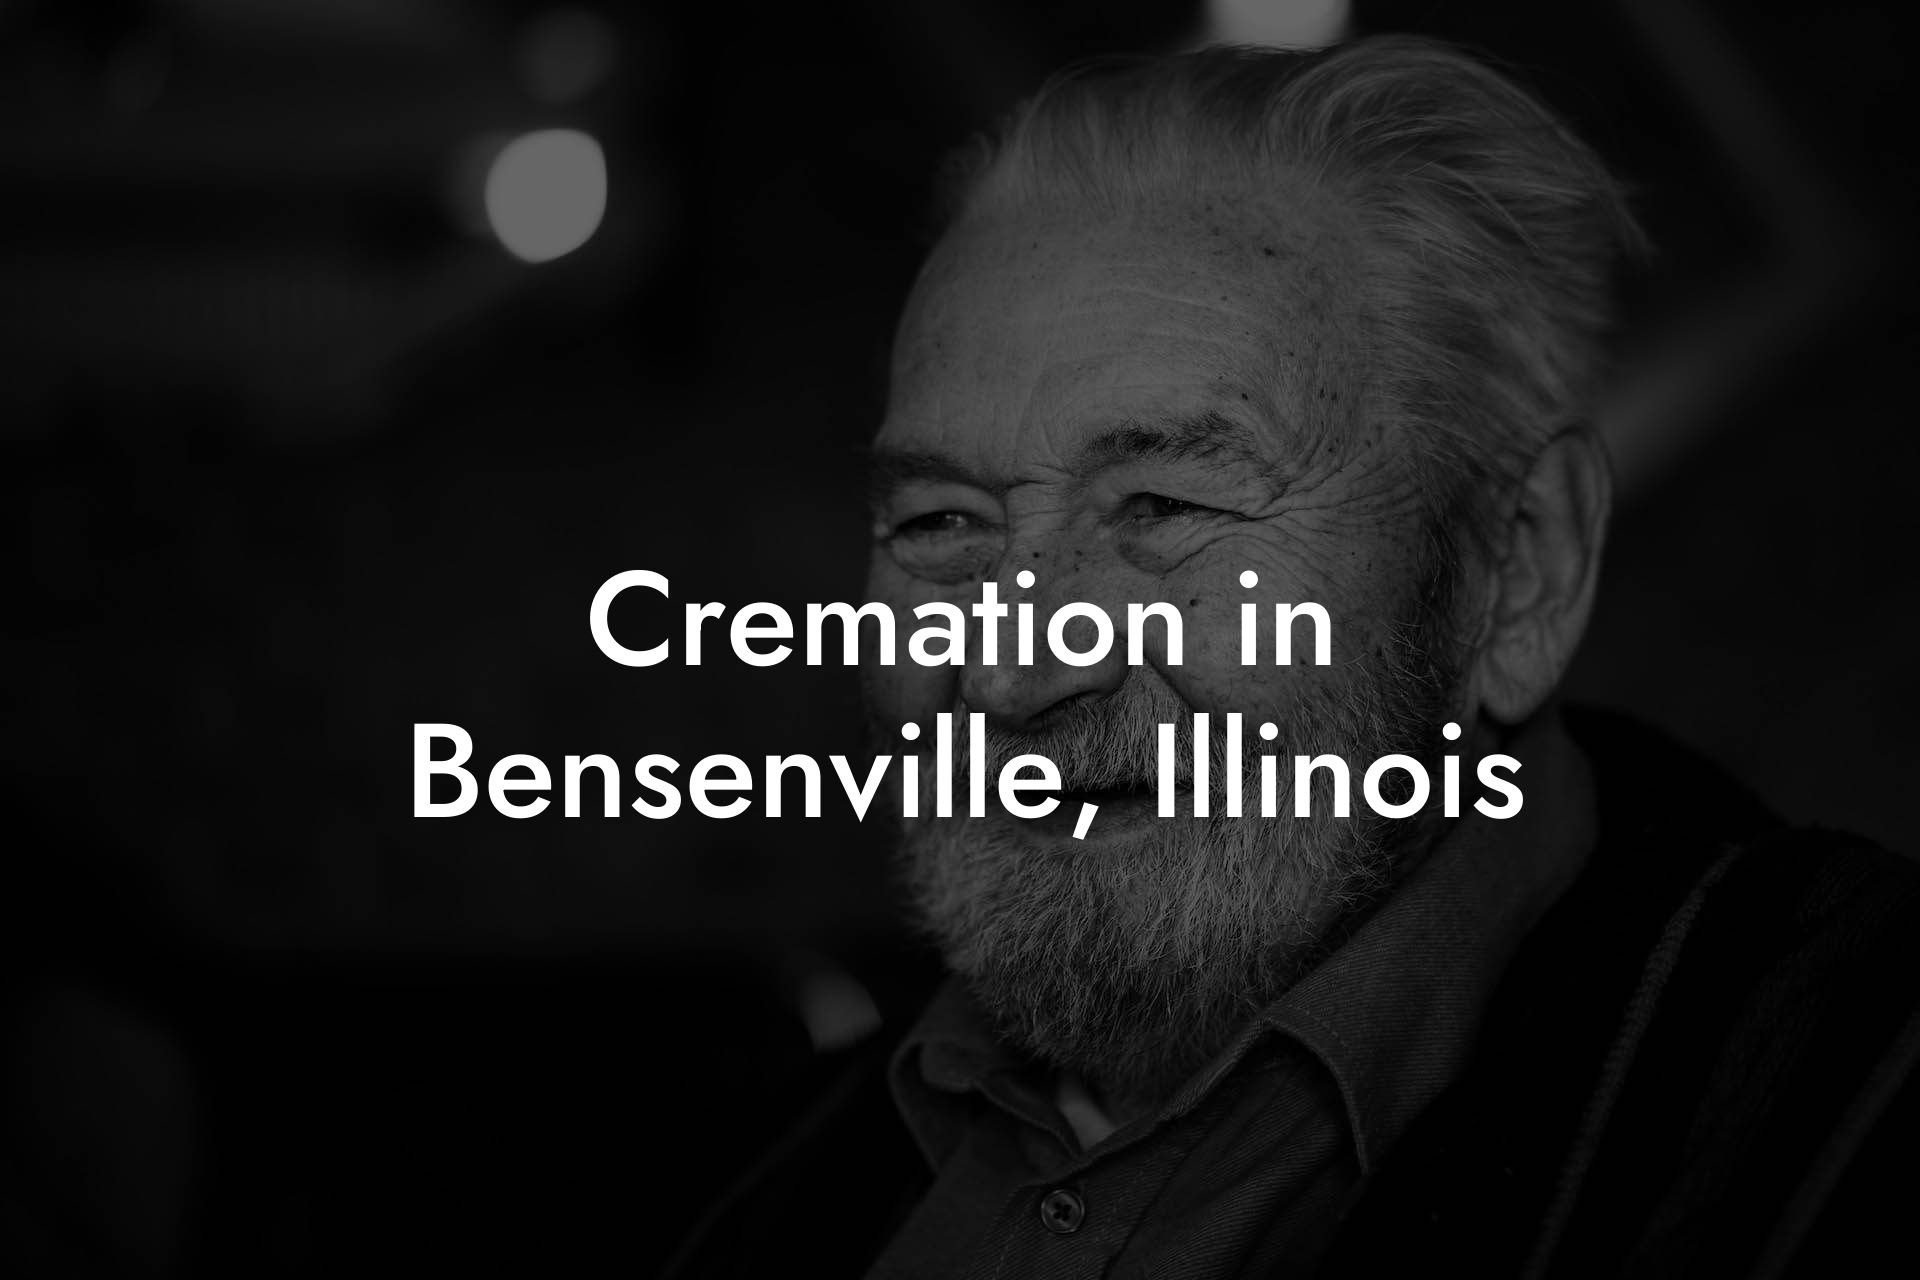 Cremation in Bensenville, Illinois